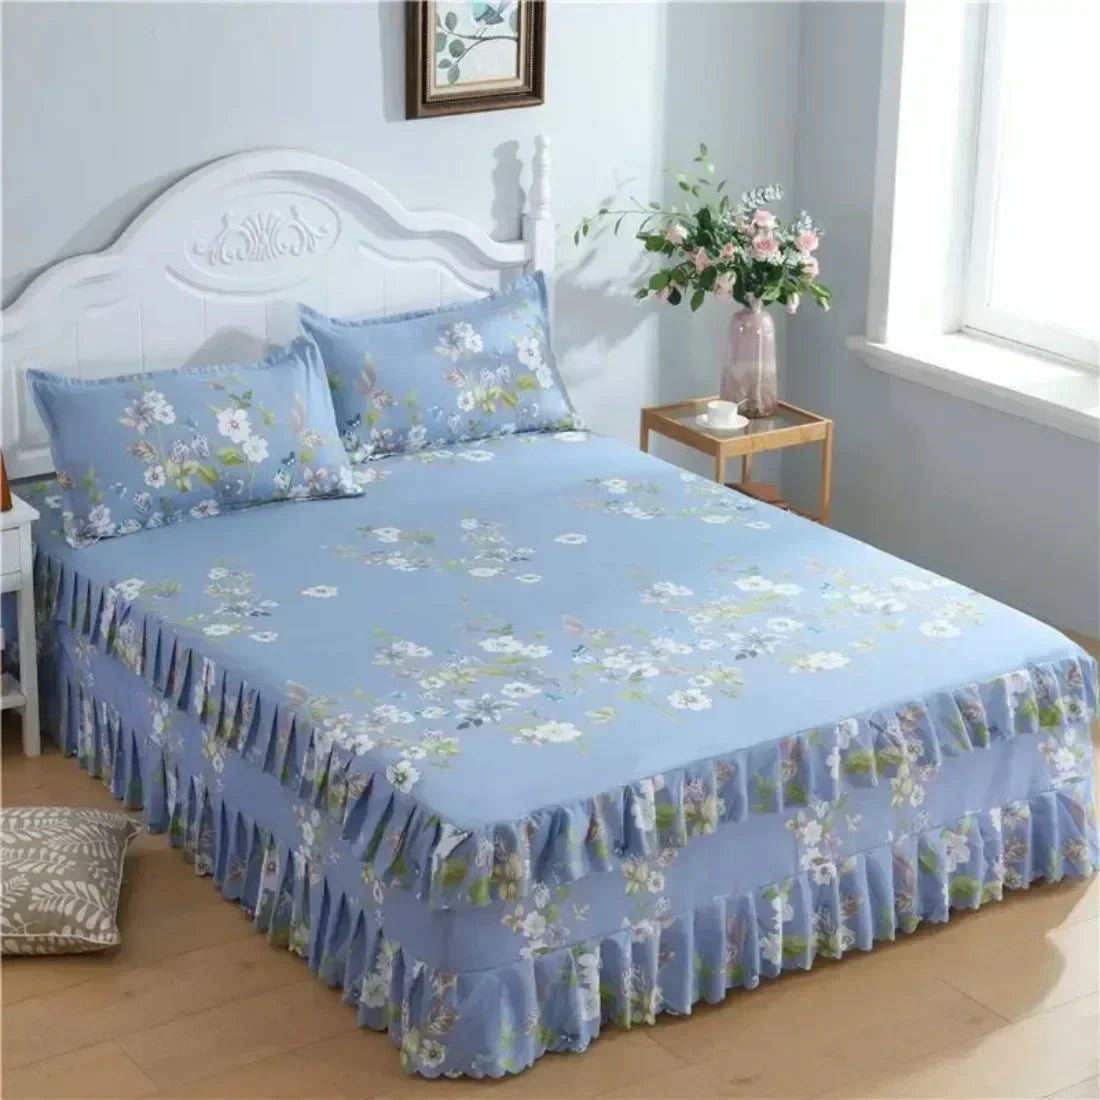 3PCS/Set Bed Sheet Set Flower Bedspread Non-Slip Bed Dress Sheet for King/Queen